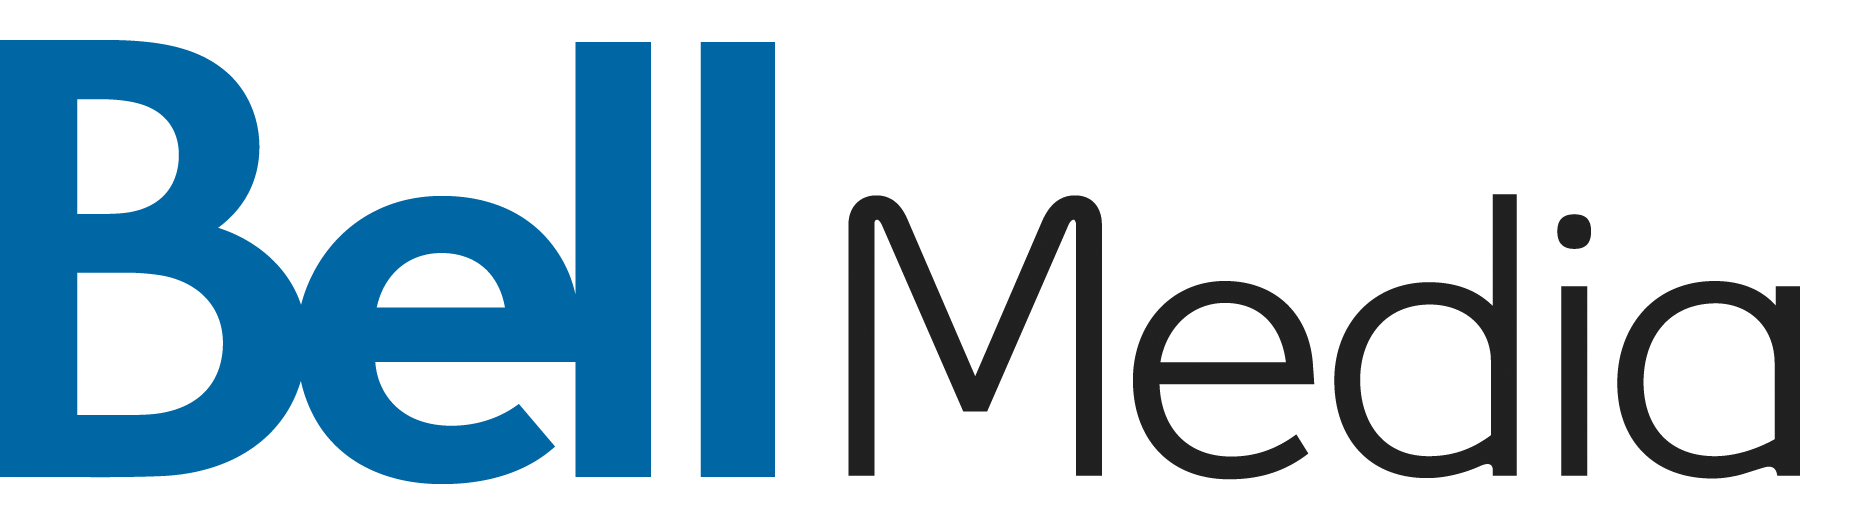 Bell-Media-Logo-Colour1.png